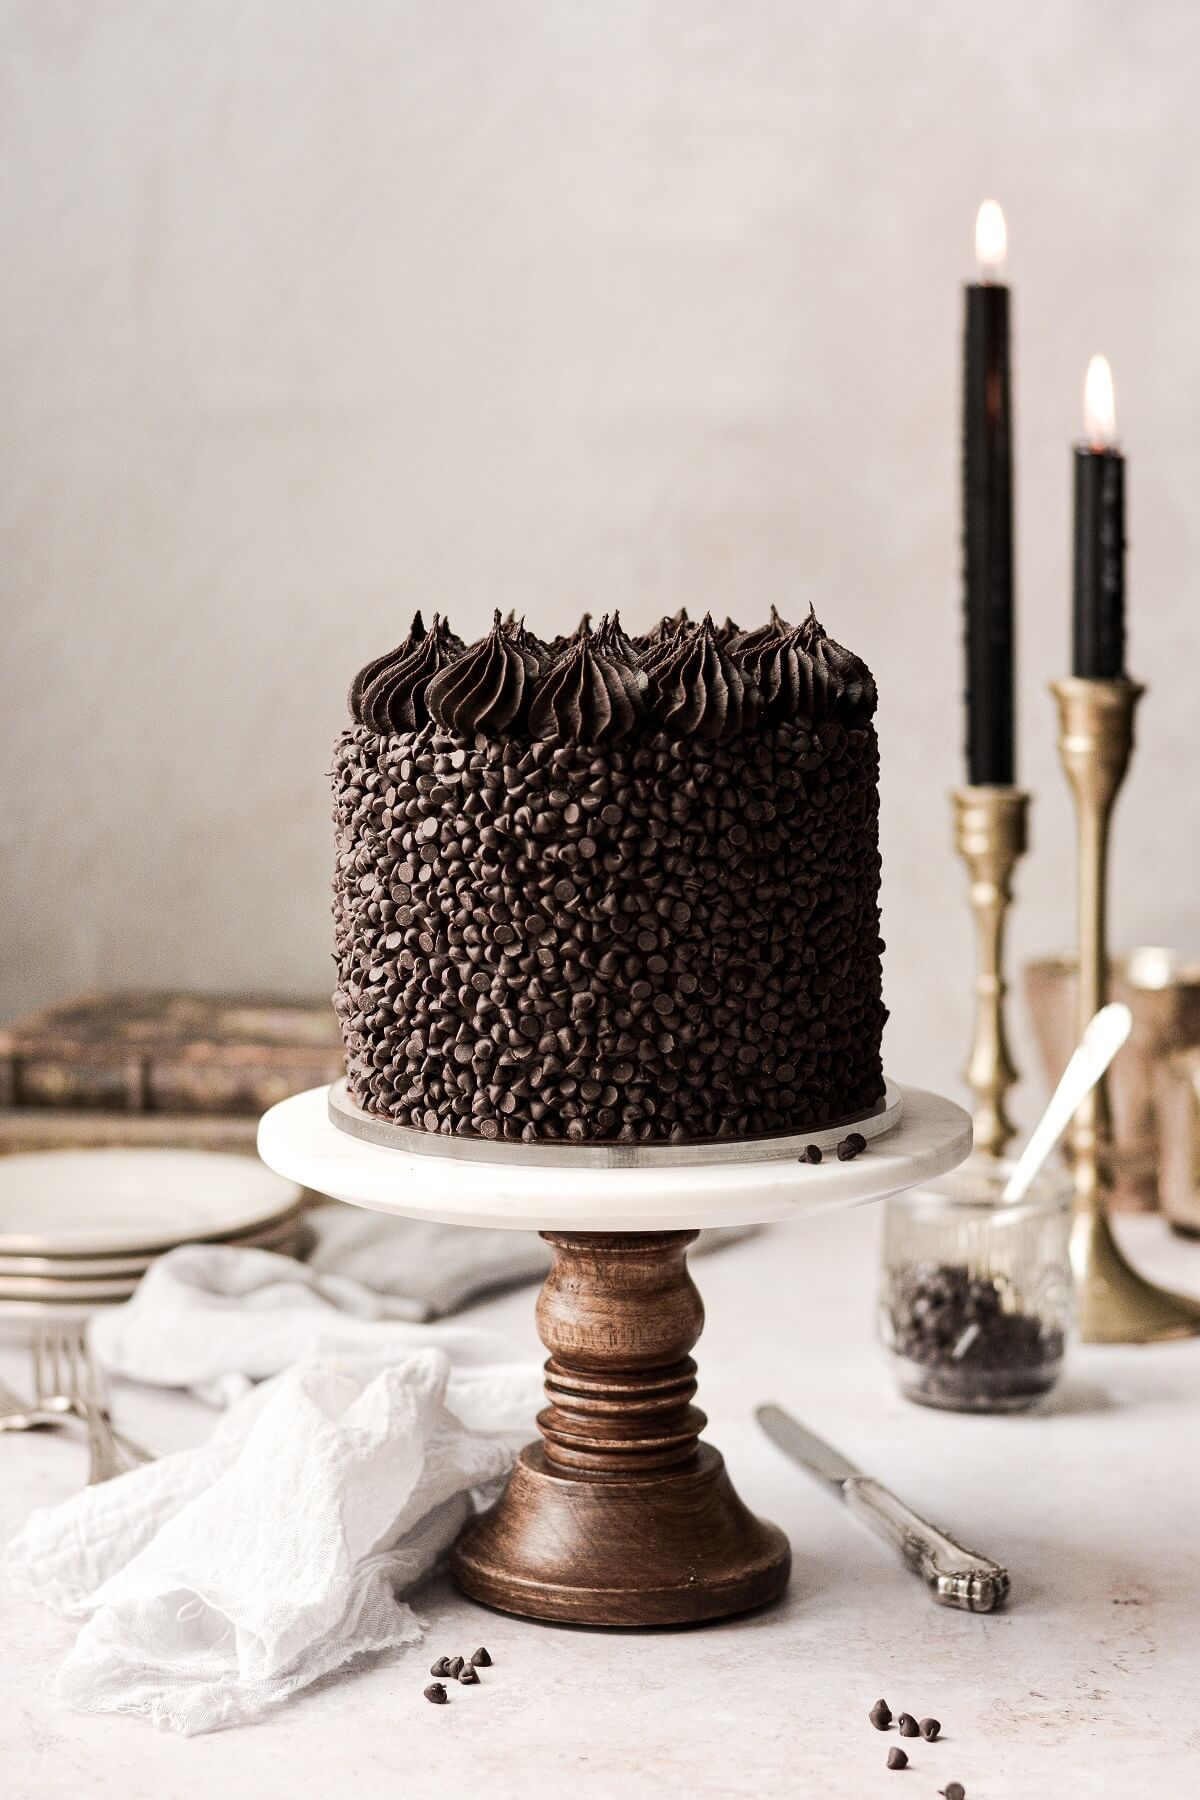 Easy Chocolate Cake Recipe How to make Chocolate Cake at Home  Homemade Chocolate  Cake Recipe  Times Food